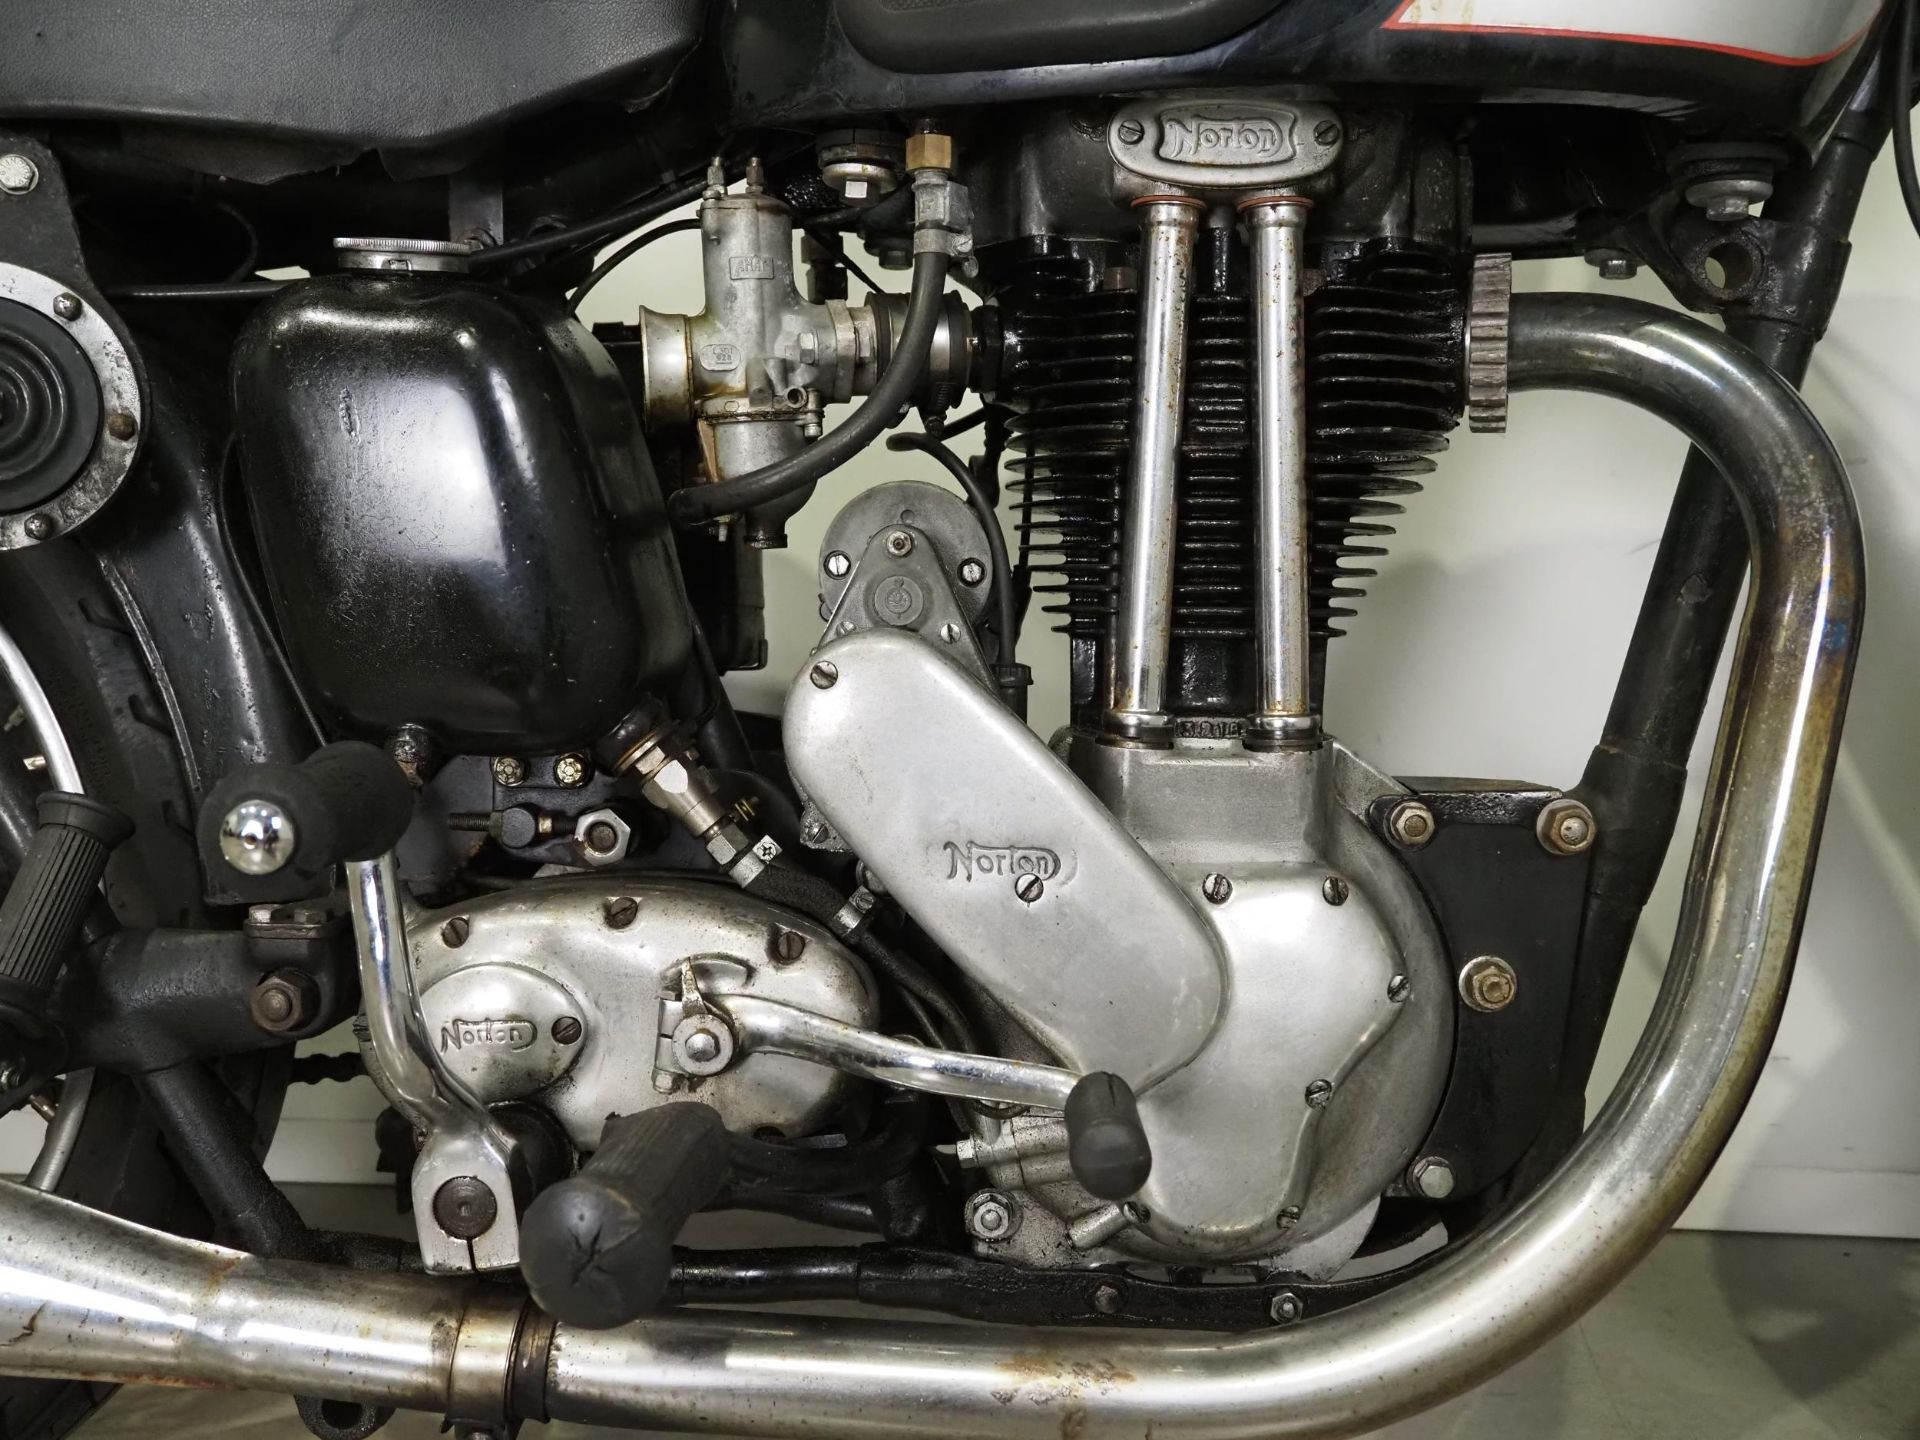 Norton ES2 1954. 500cc. Frame No. 53226 as stated on V5. Engine No. 62034K4 Property of a deceased - Image 5 of 7